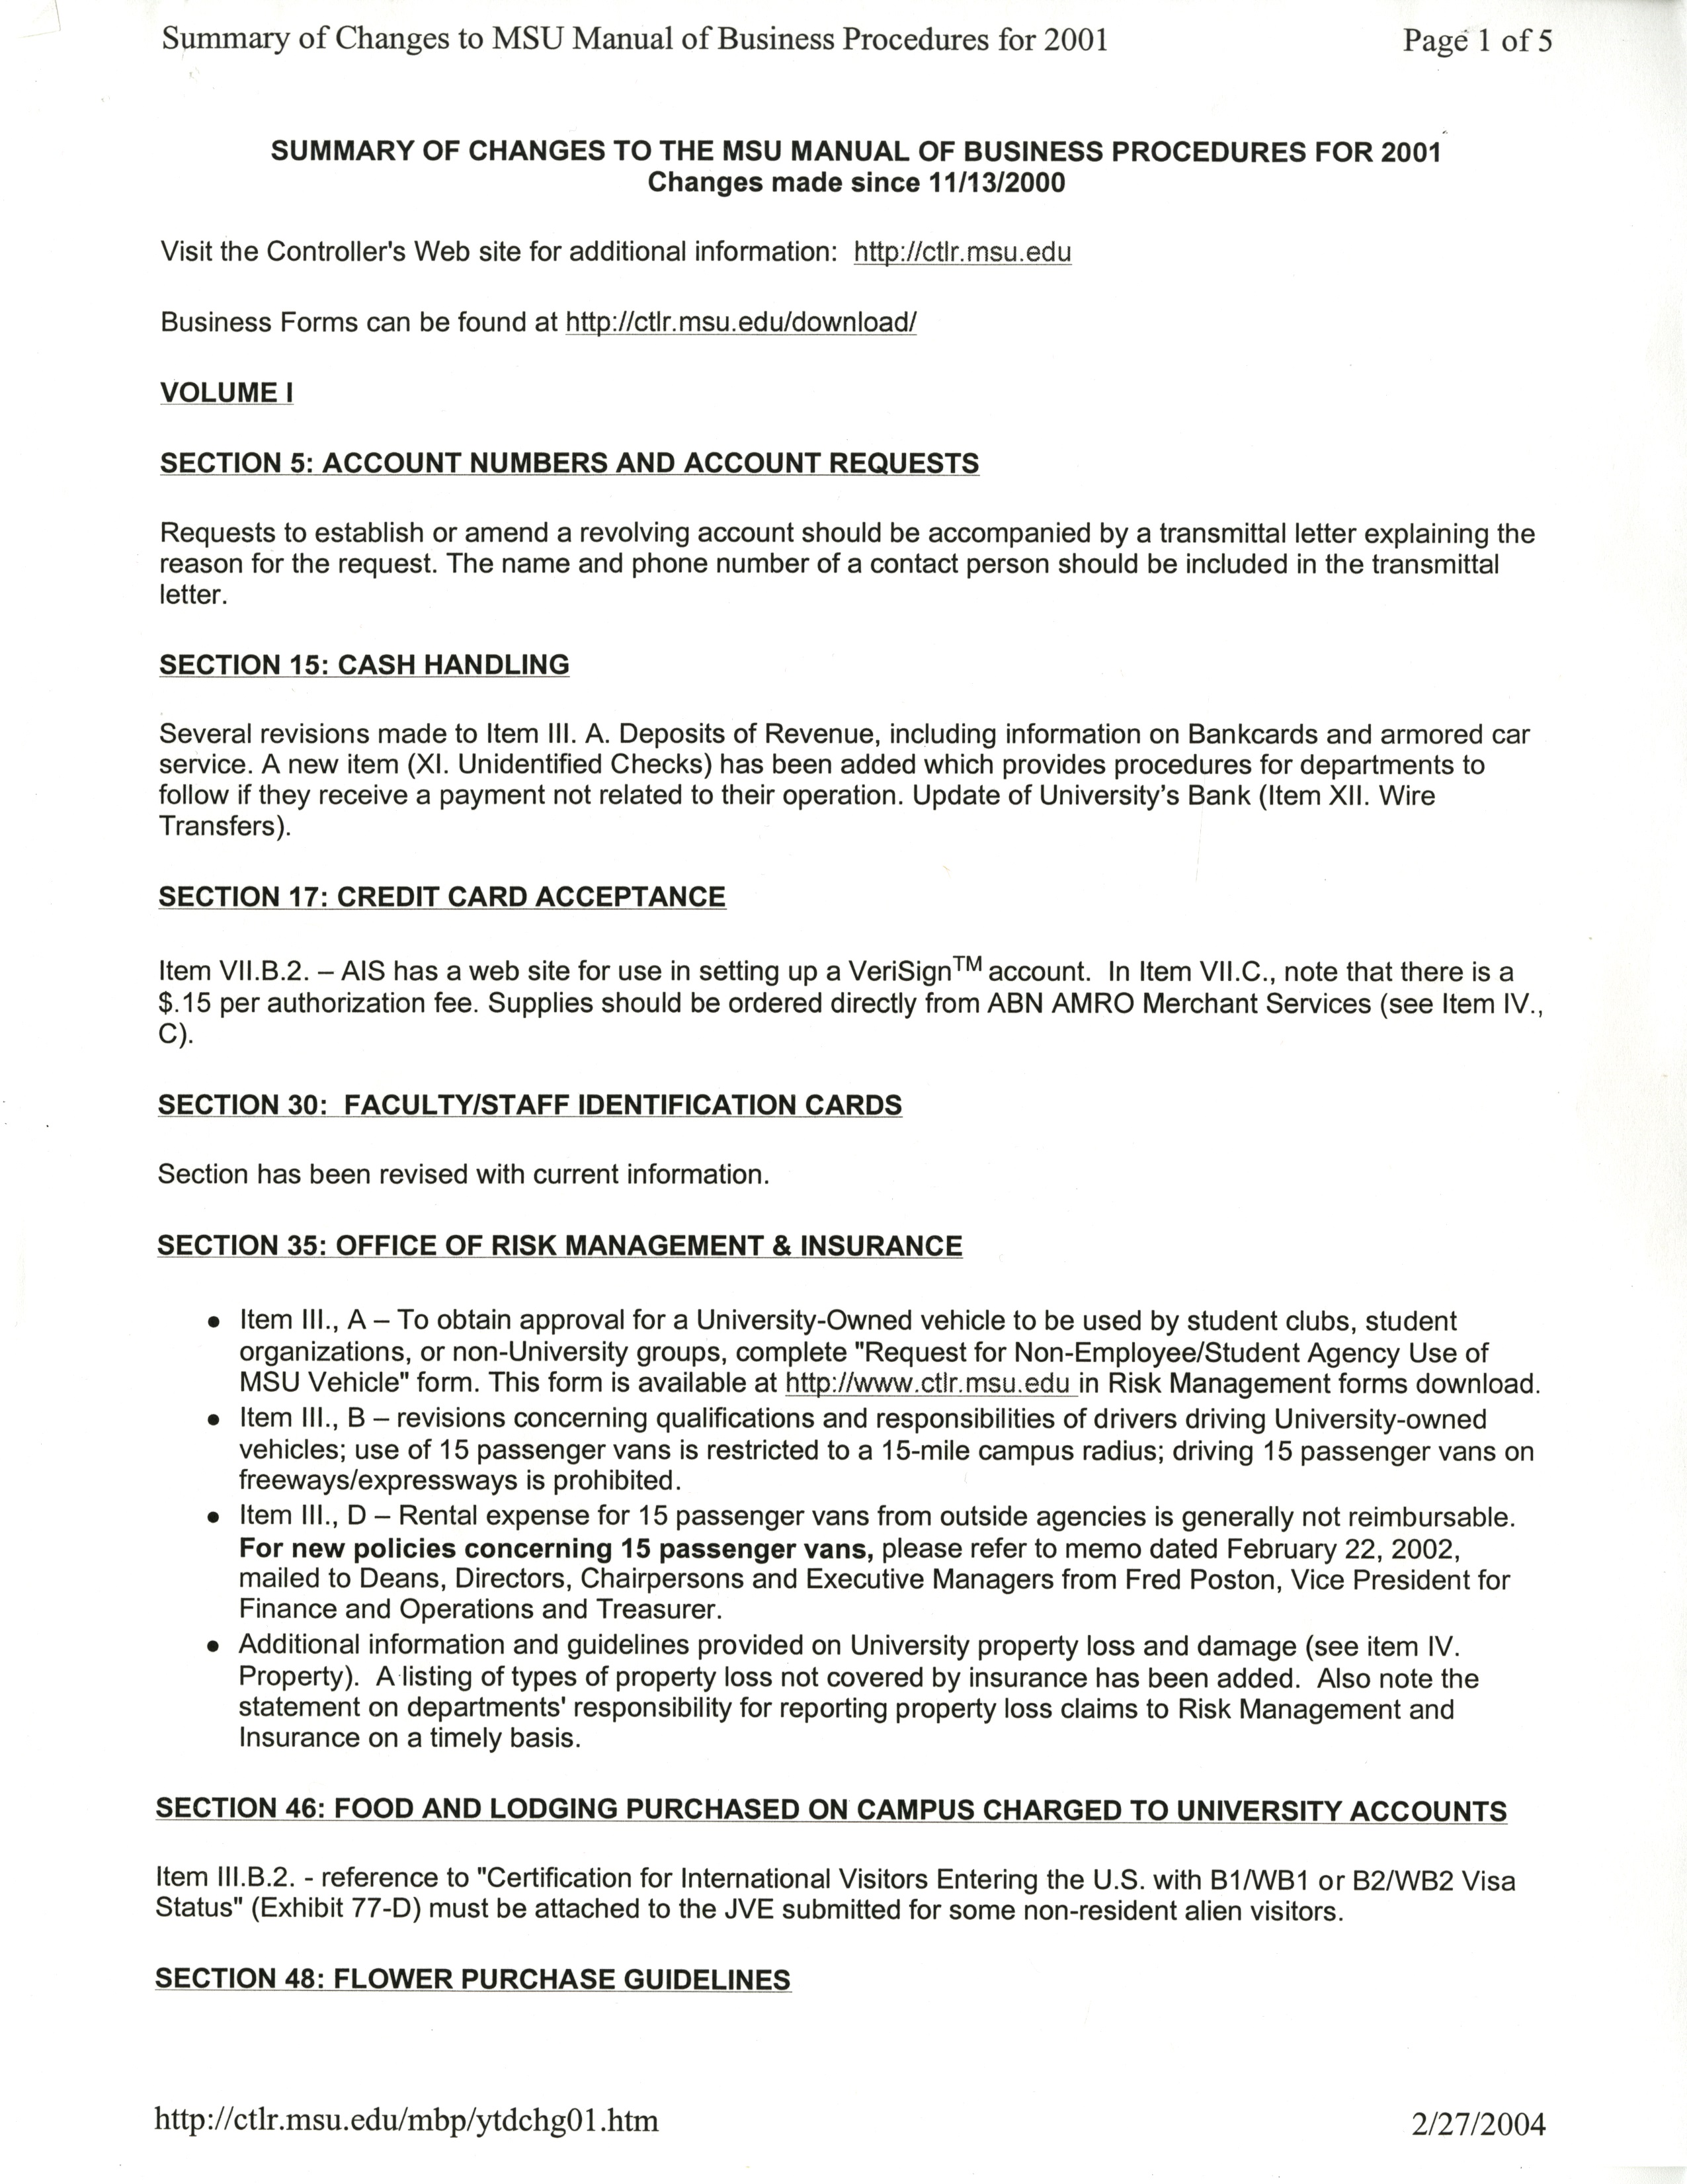 MSU Manual of Business Procedures, 2000-2002